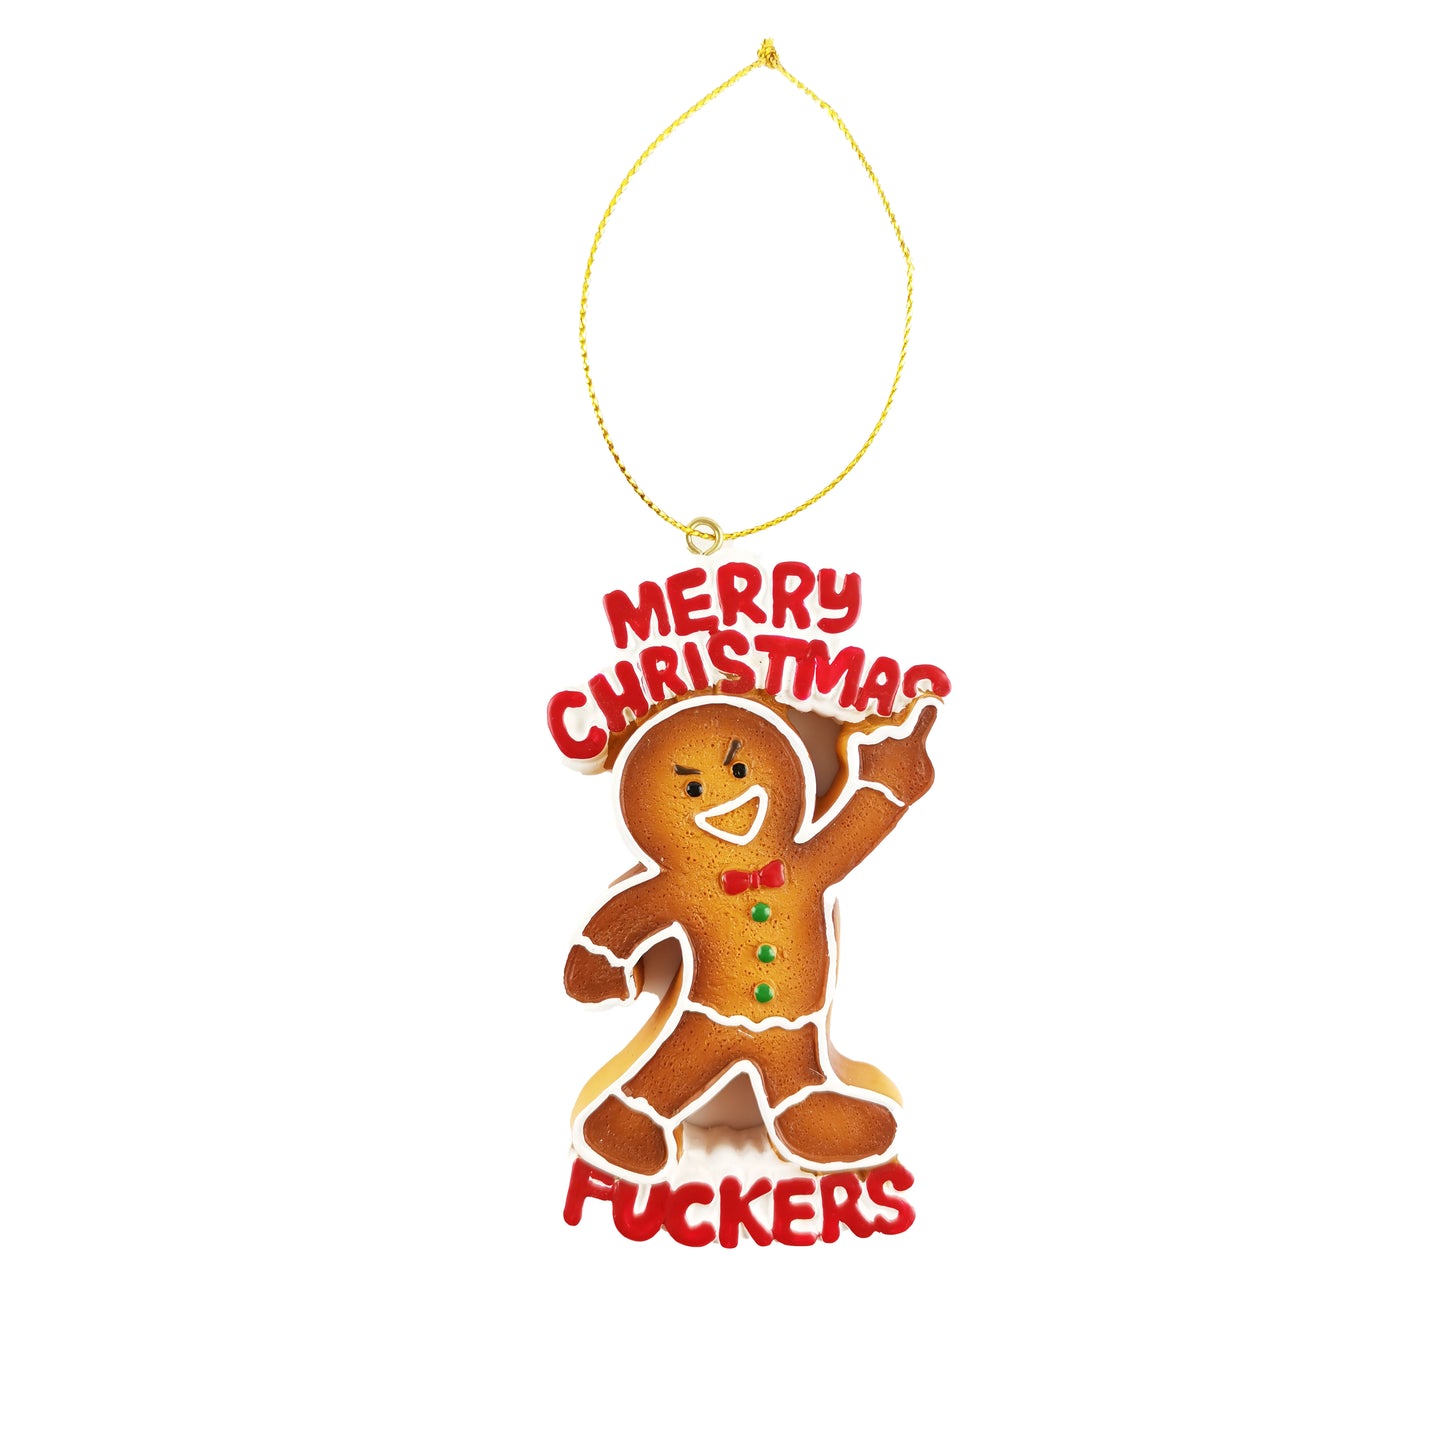 Crooked Christmas - Merry Christmas Fuckers